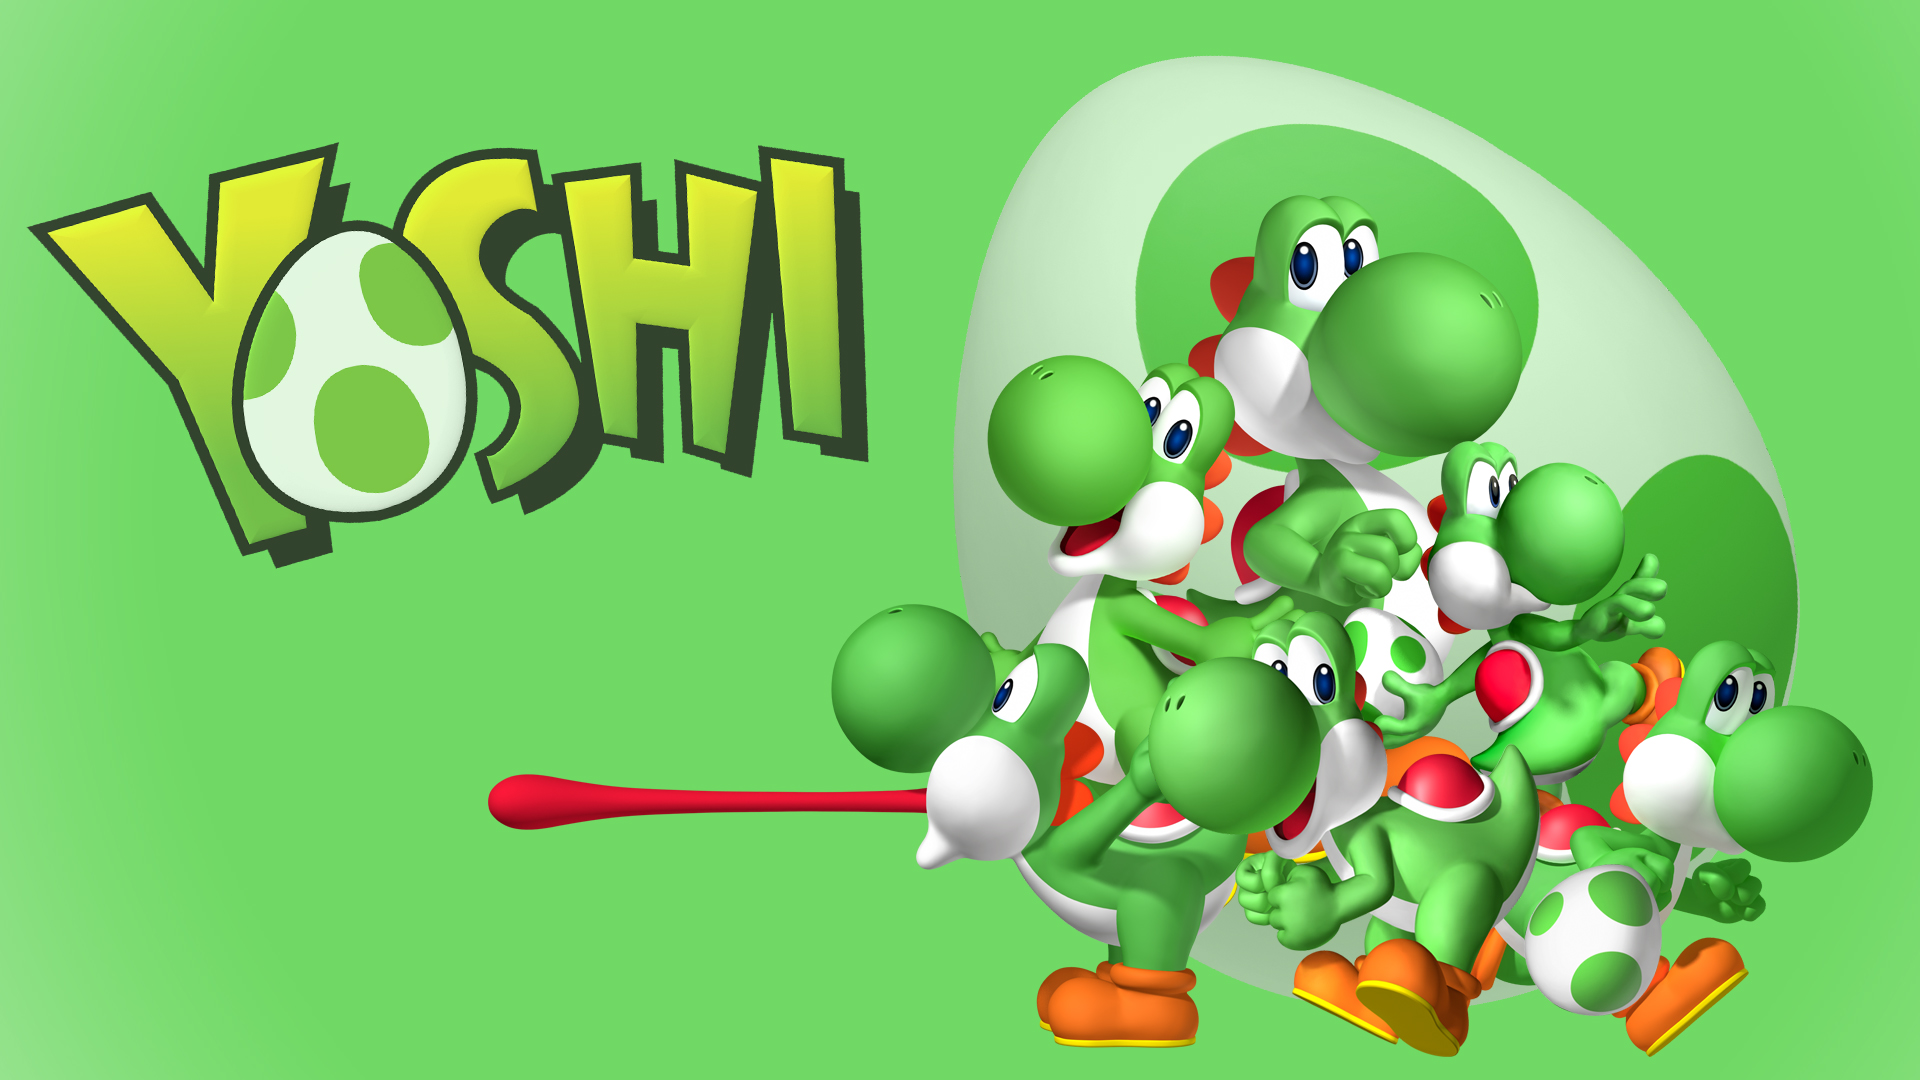 Video Game Yoshi HD Wallpaper | Background Image